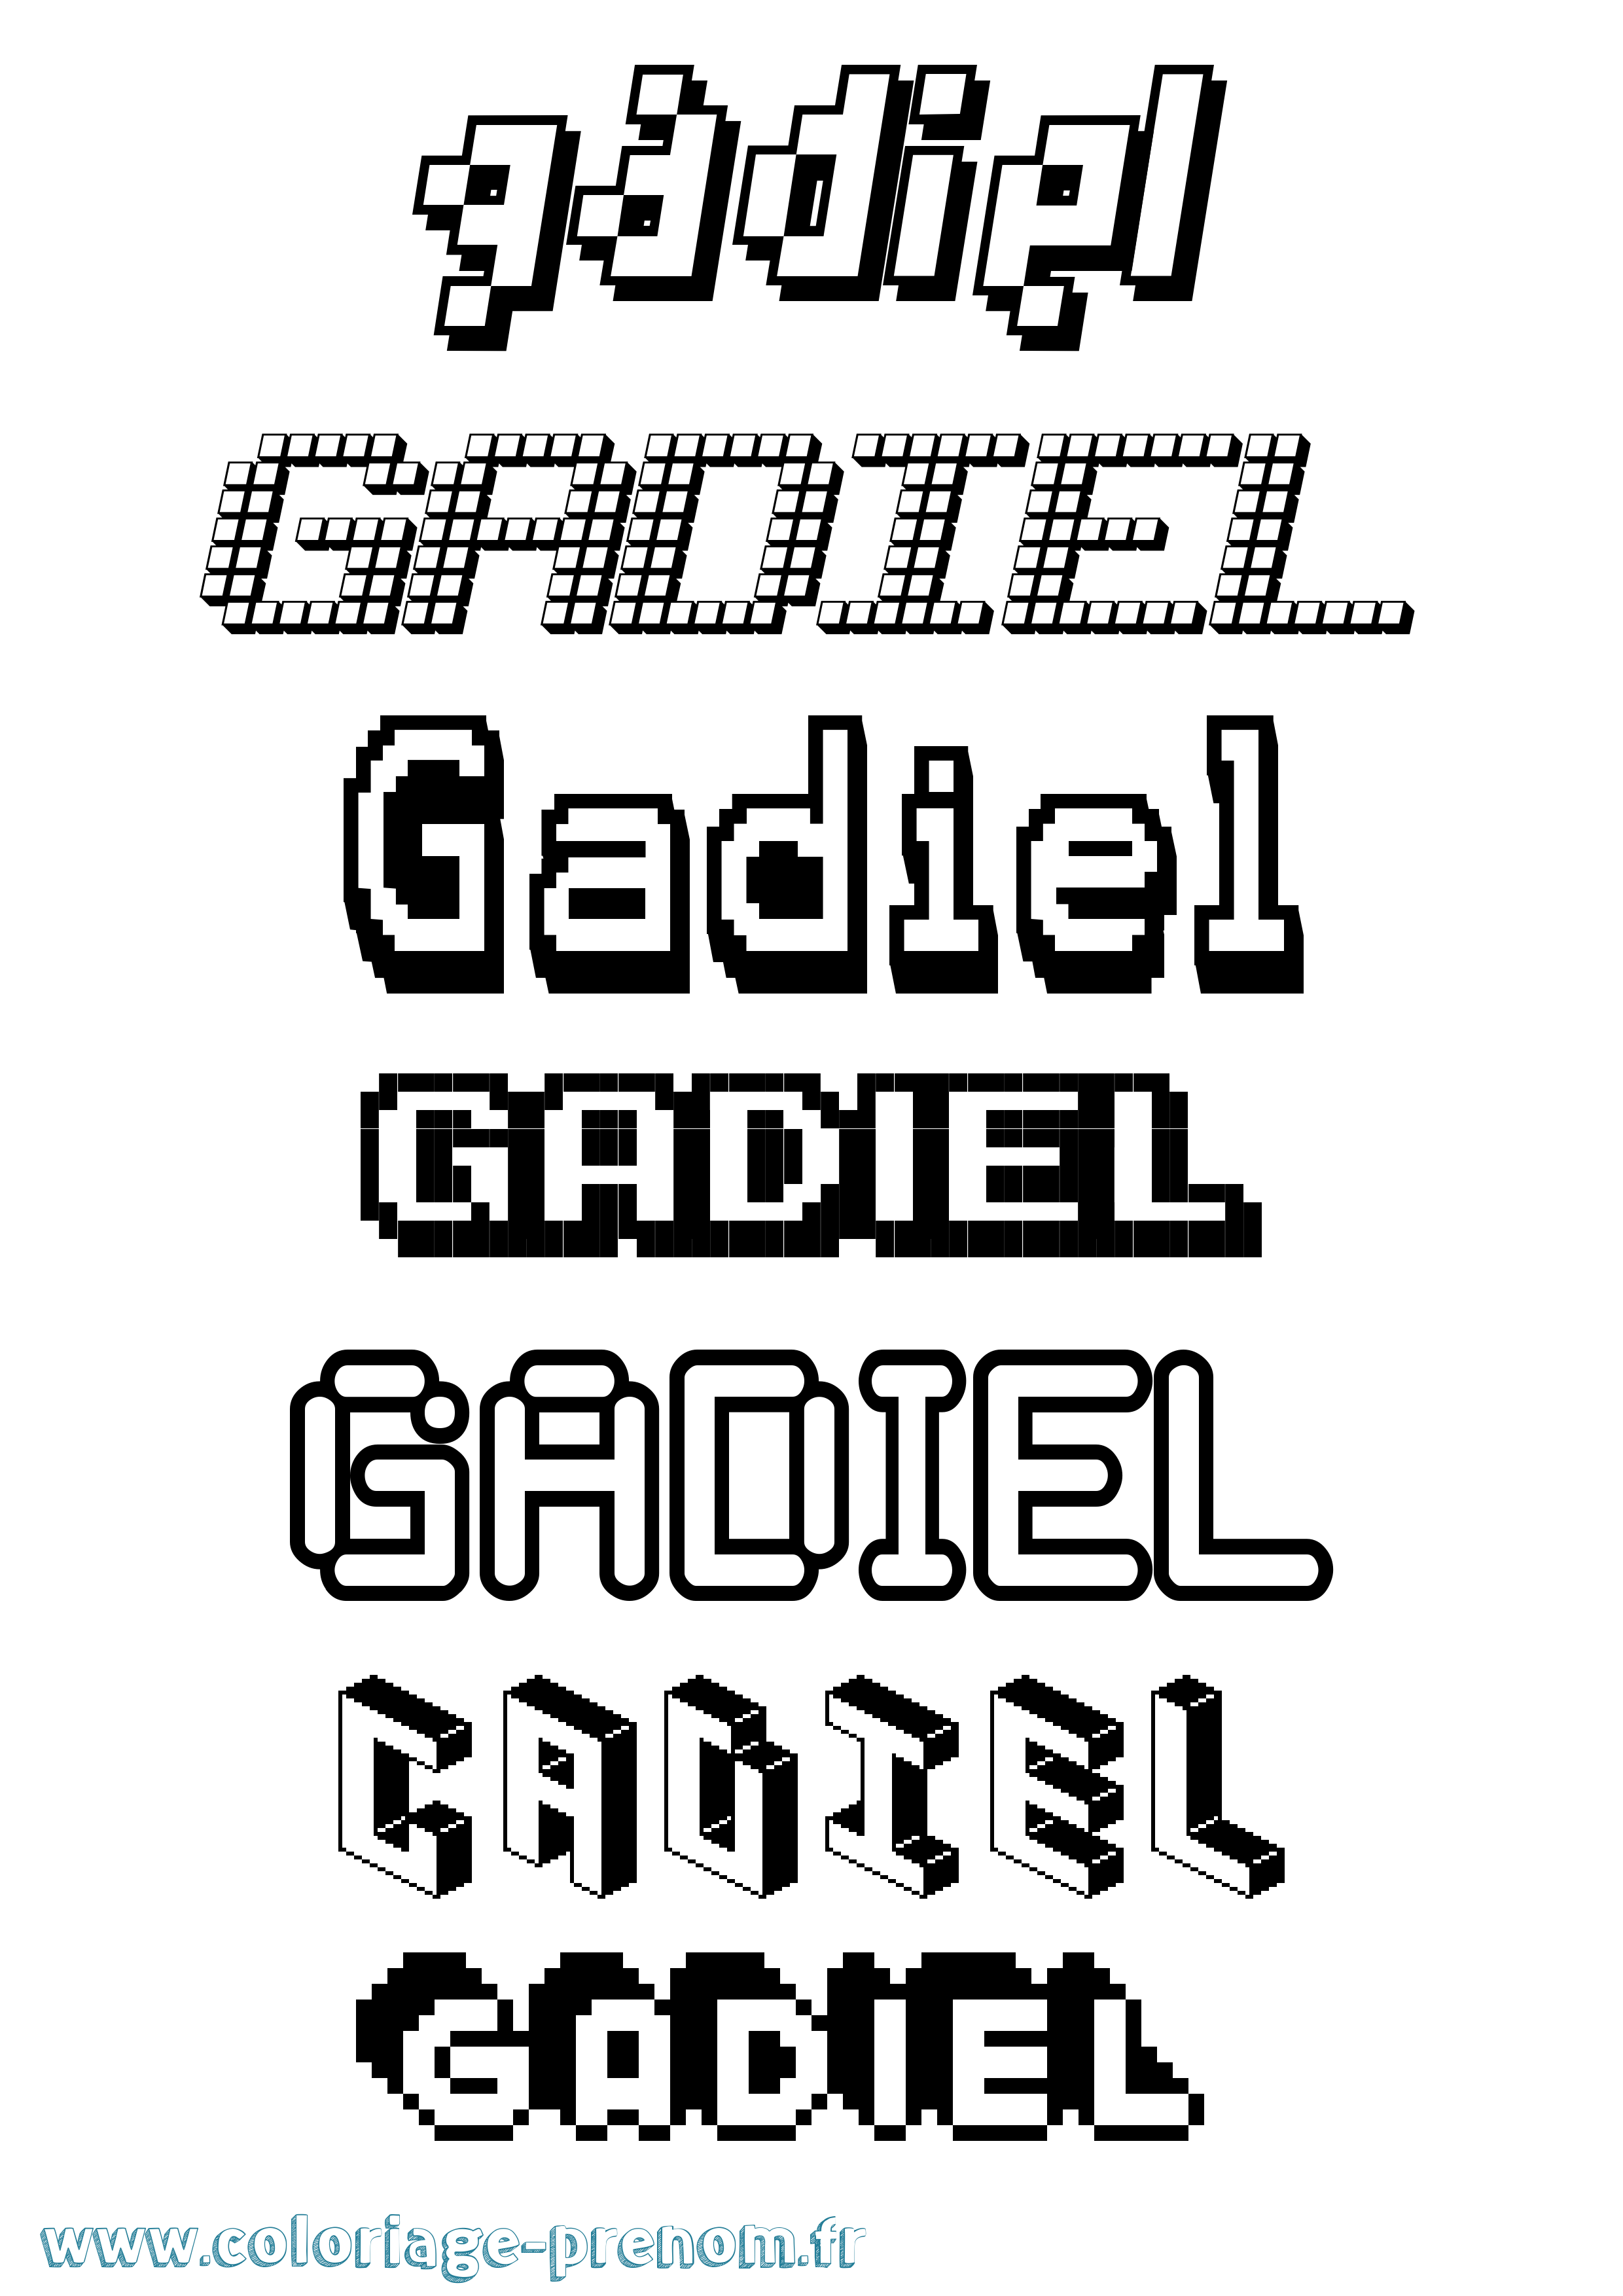 Coloriage prénom Gadiel Pixel